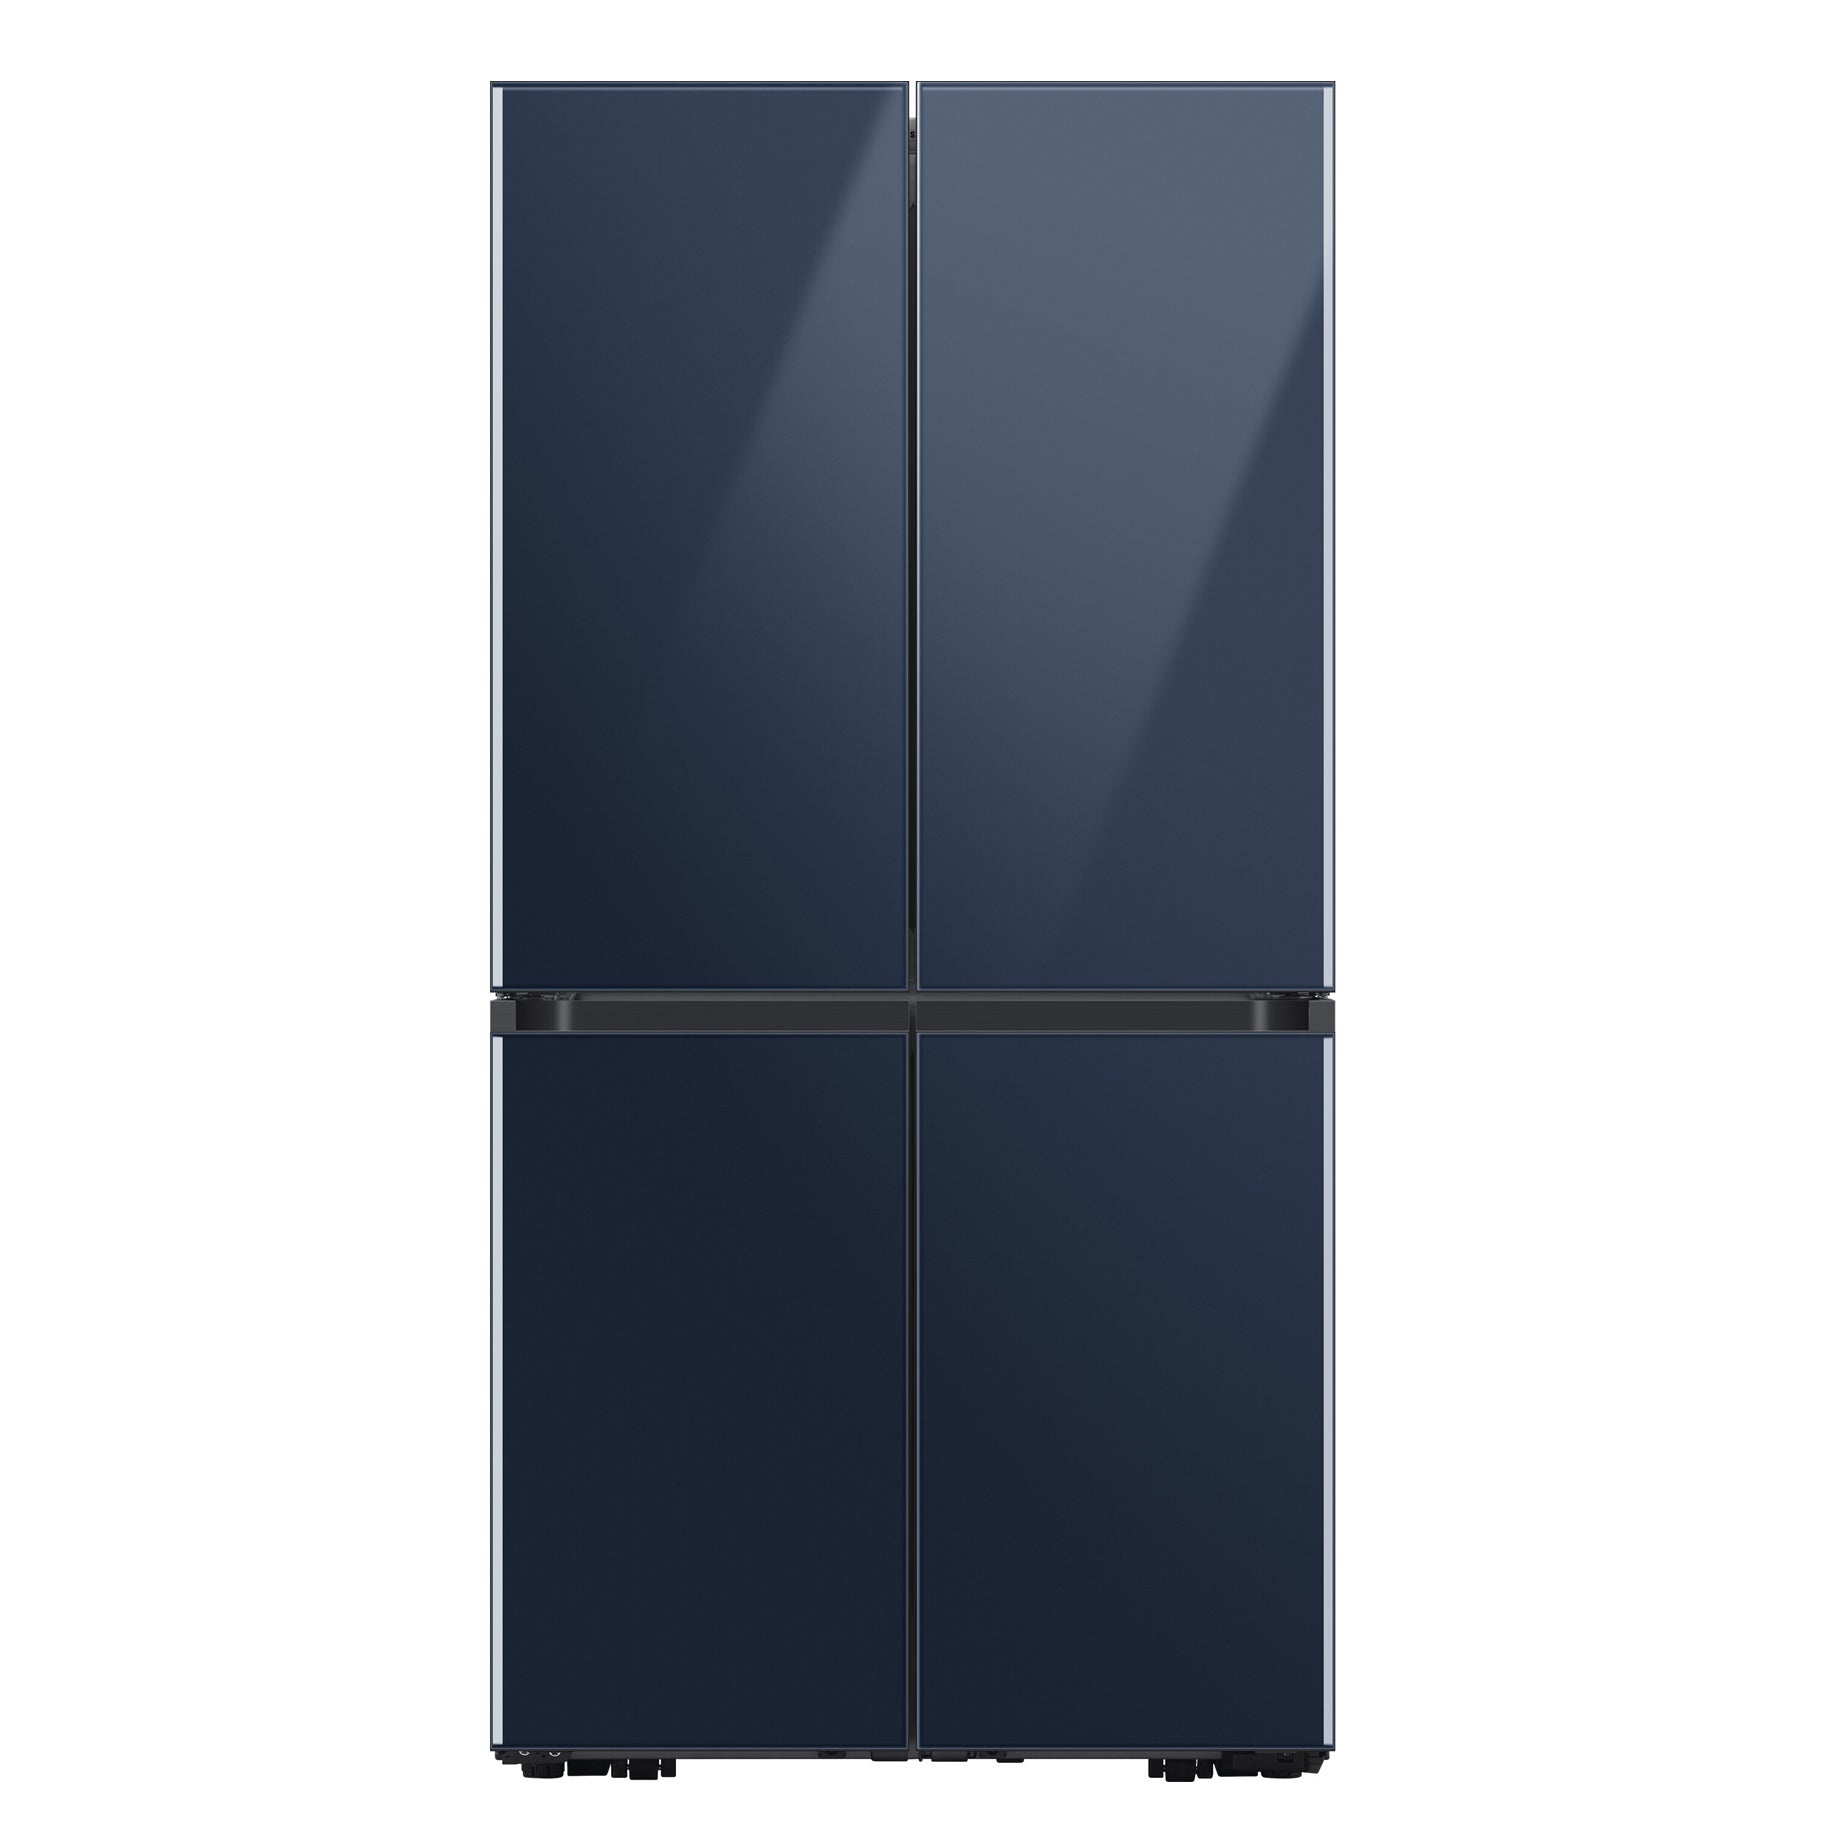 Samsung BESPOKE Four Door Flex Refrigerator Domino